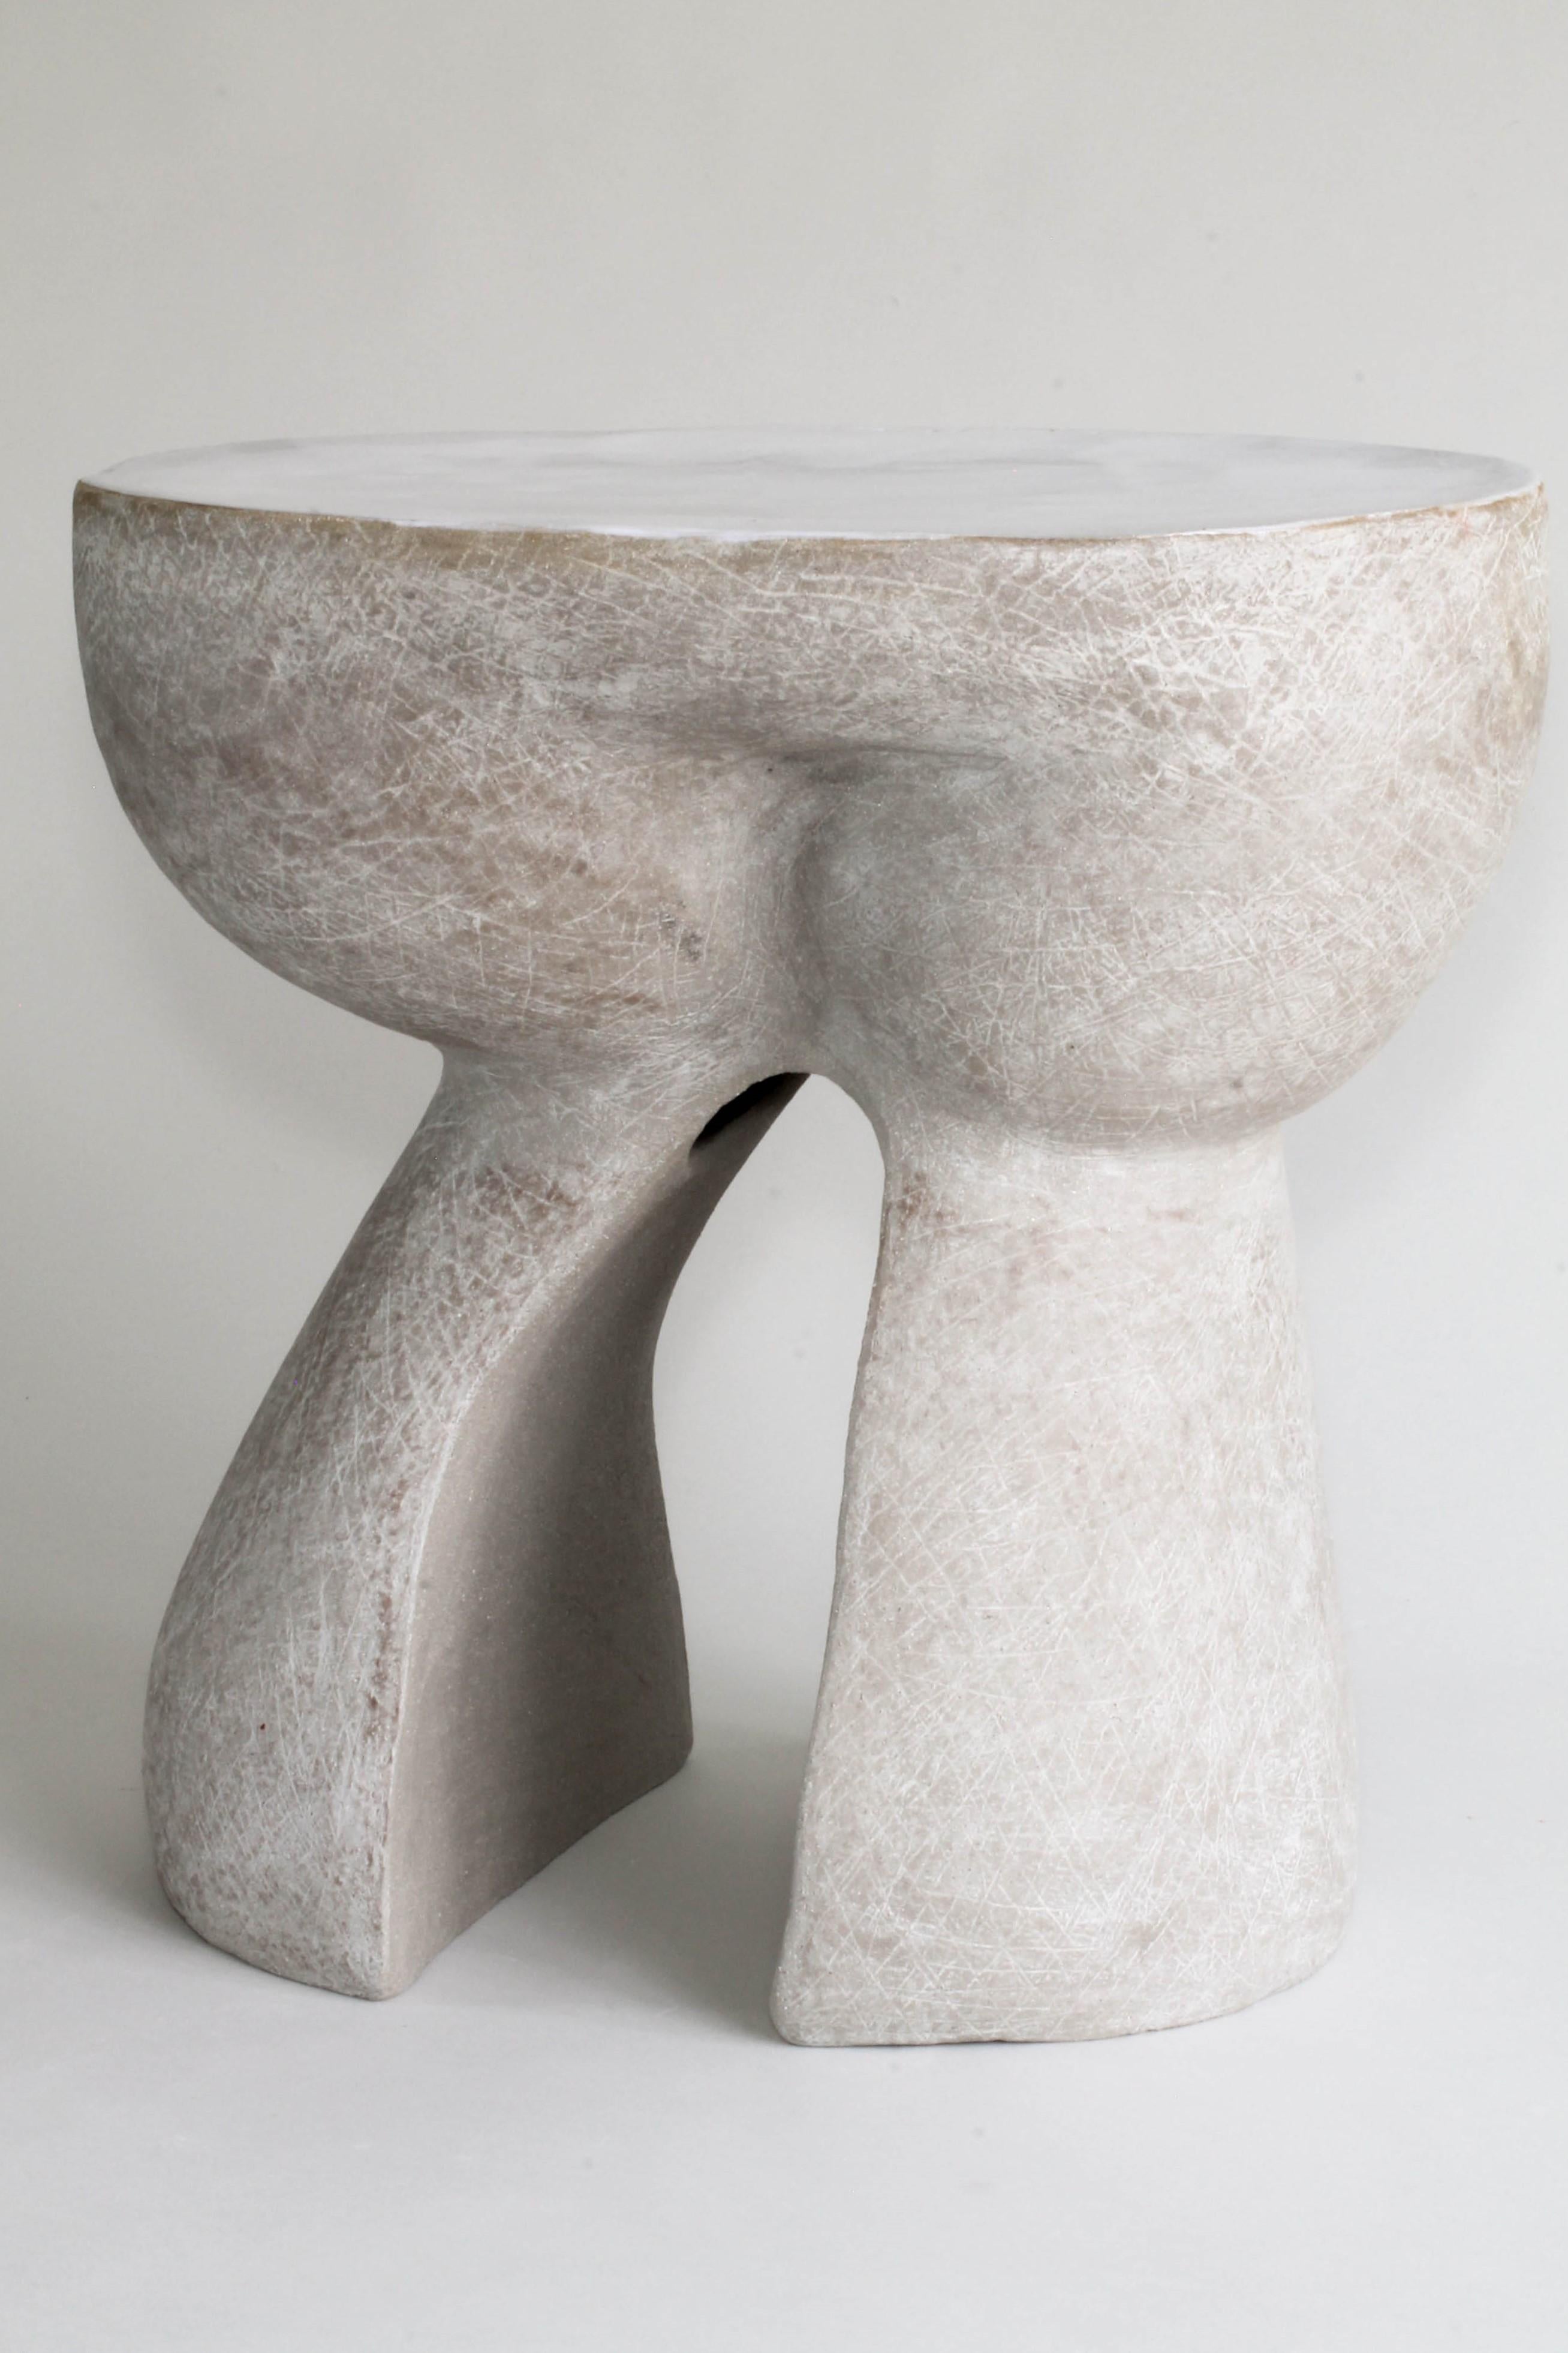 Other Sculptural Ceramic Side Table For Sale